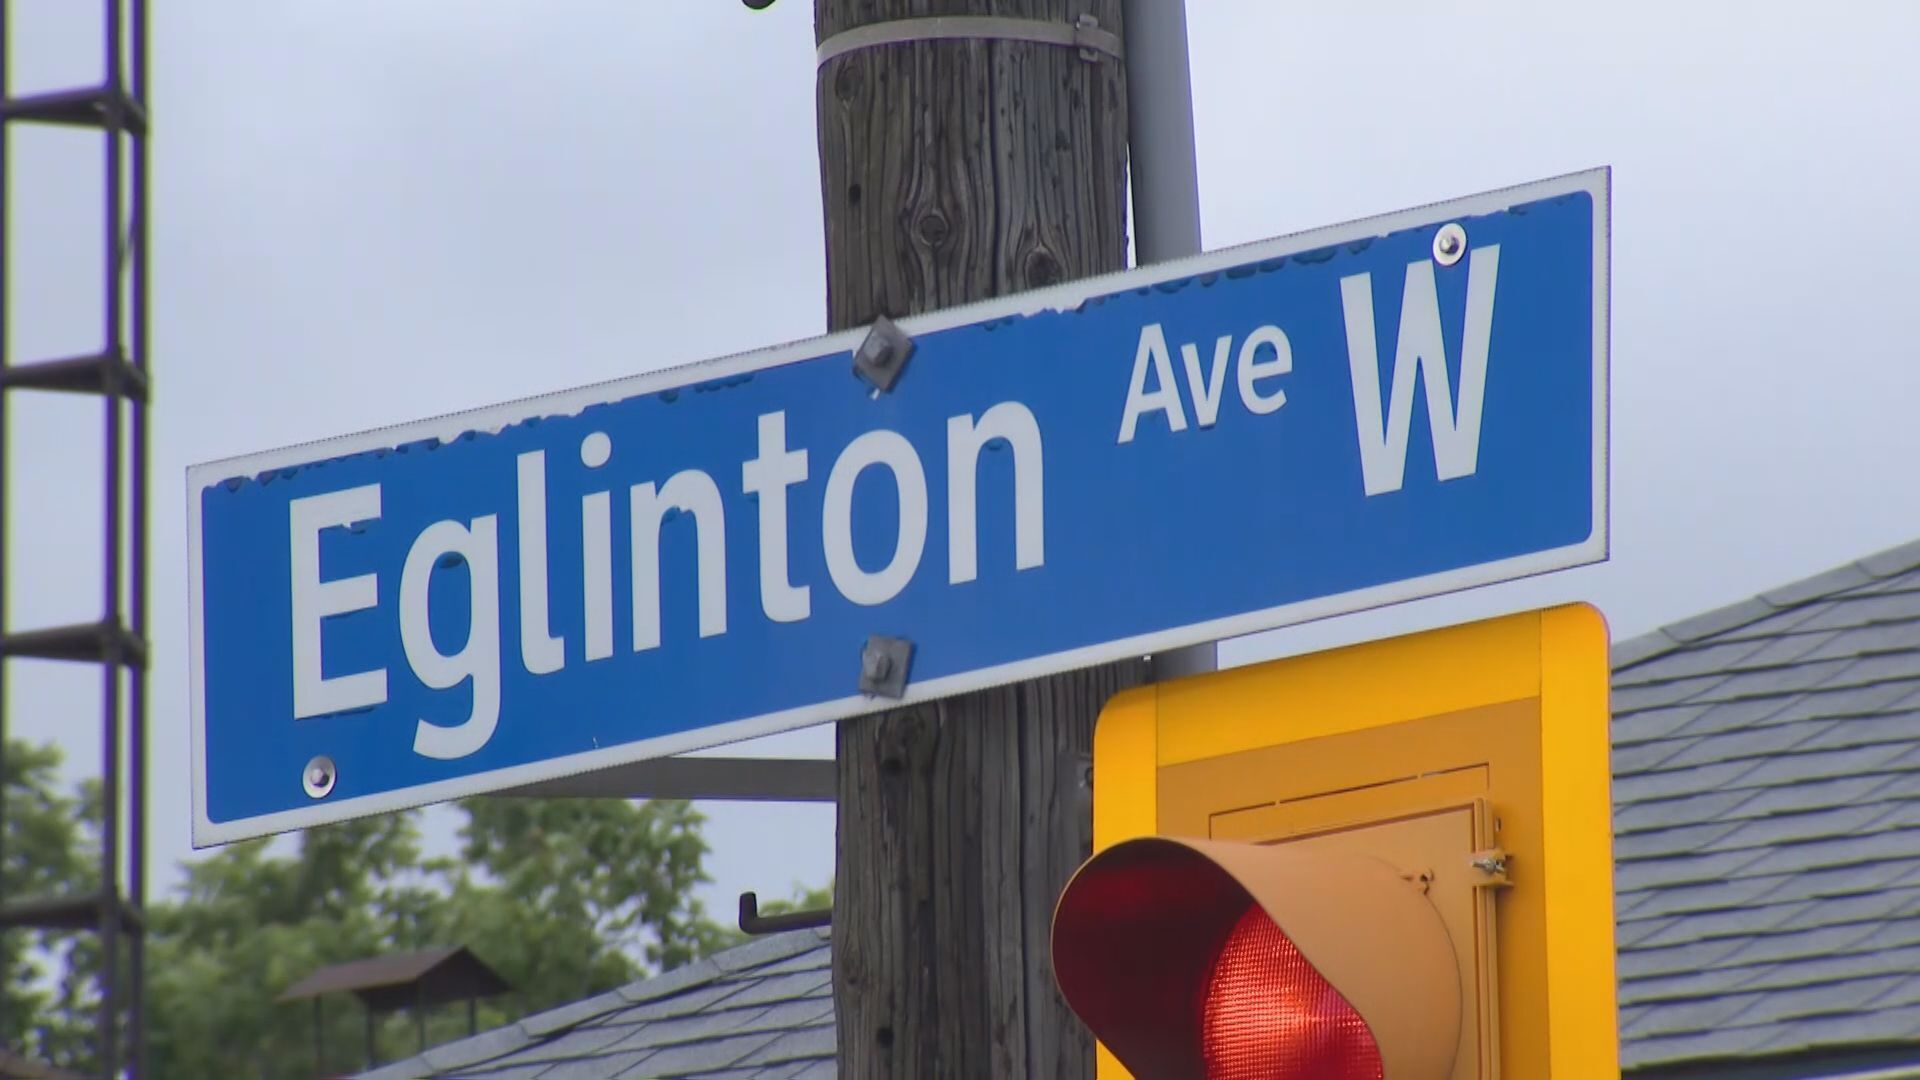 Eglinton Avenue West named GTA’s worst road… again